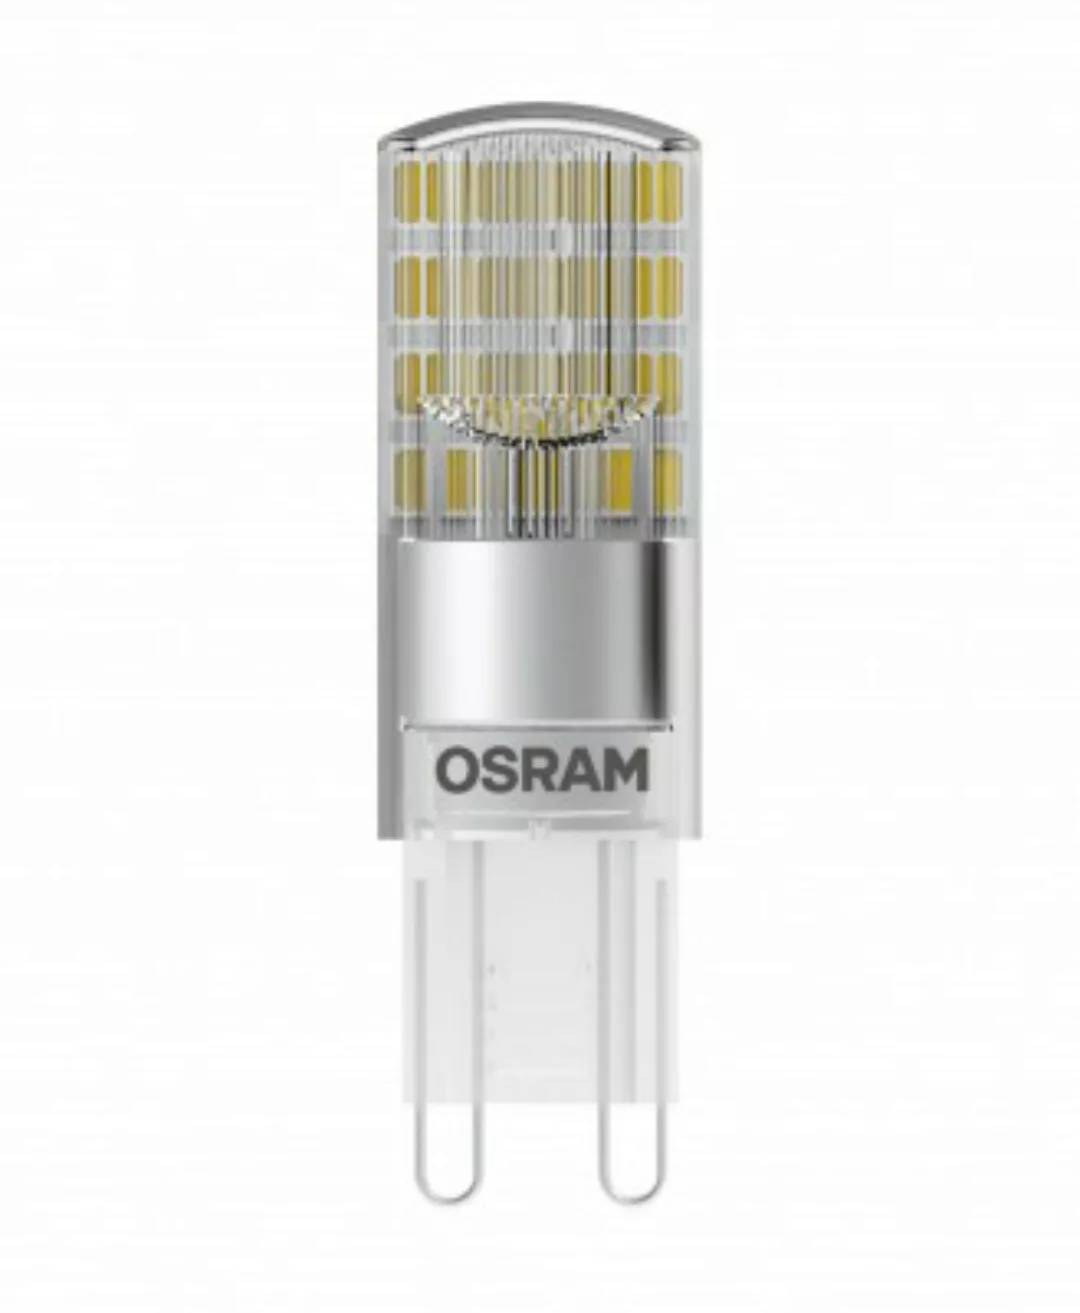 OSRAM LED STAR PIN 48 (320°) BLI K Kaltweiß SMD Klar G9 Stiftsockellampe günstig online kaufen